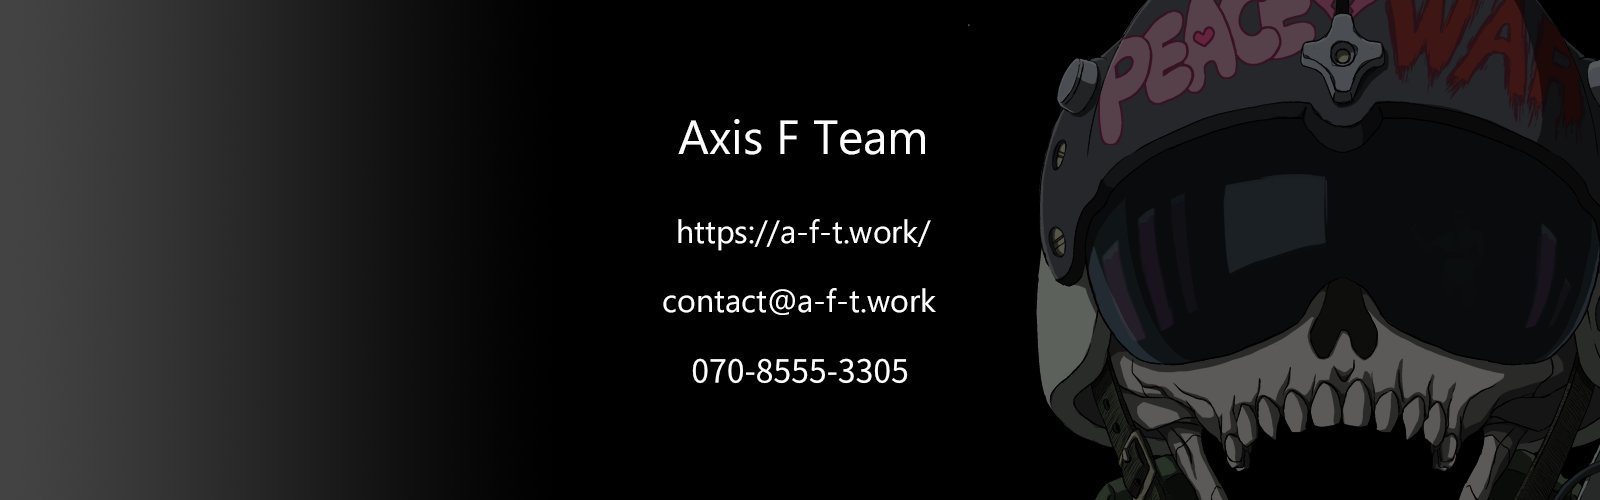 Axis F Team